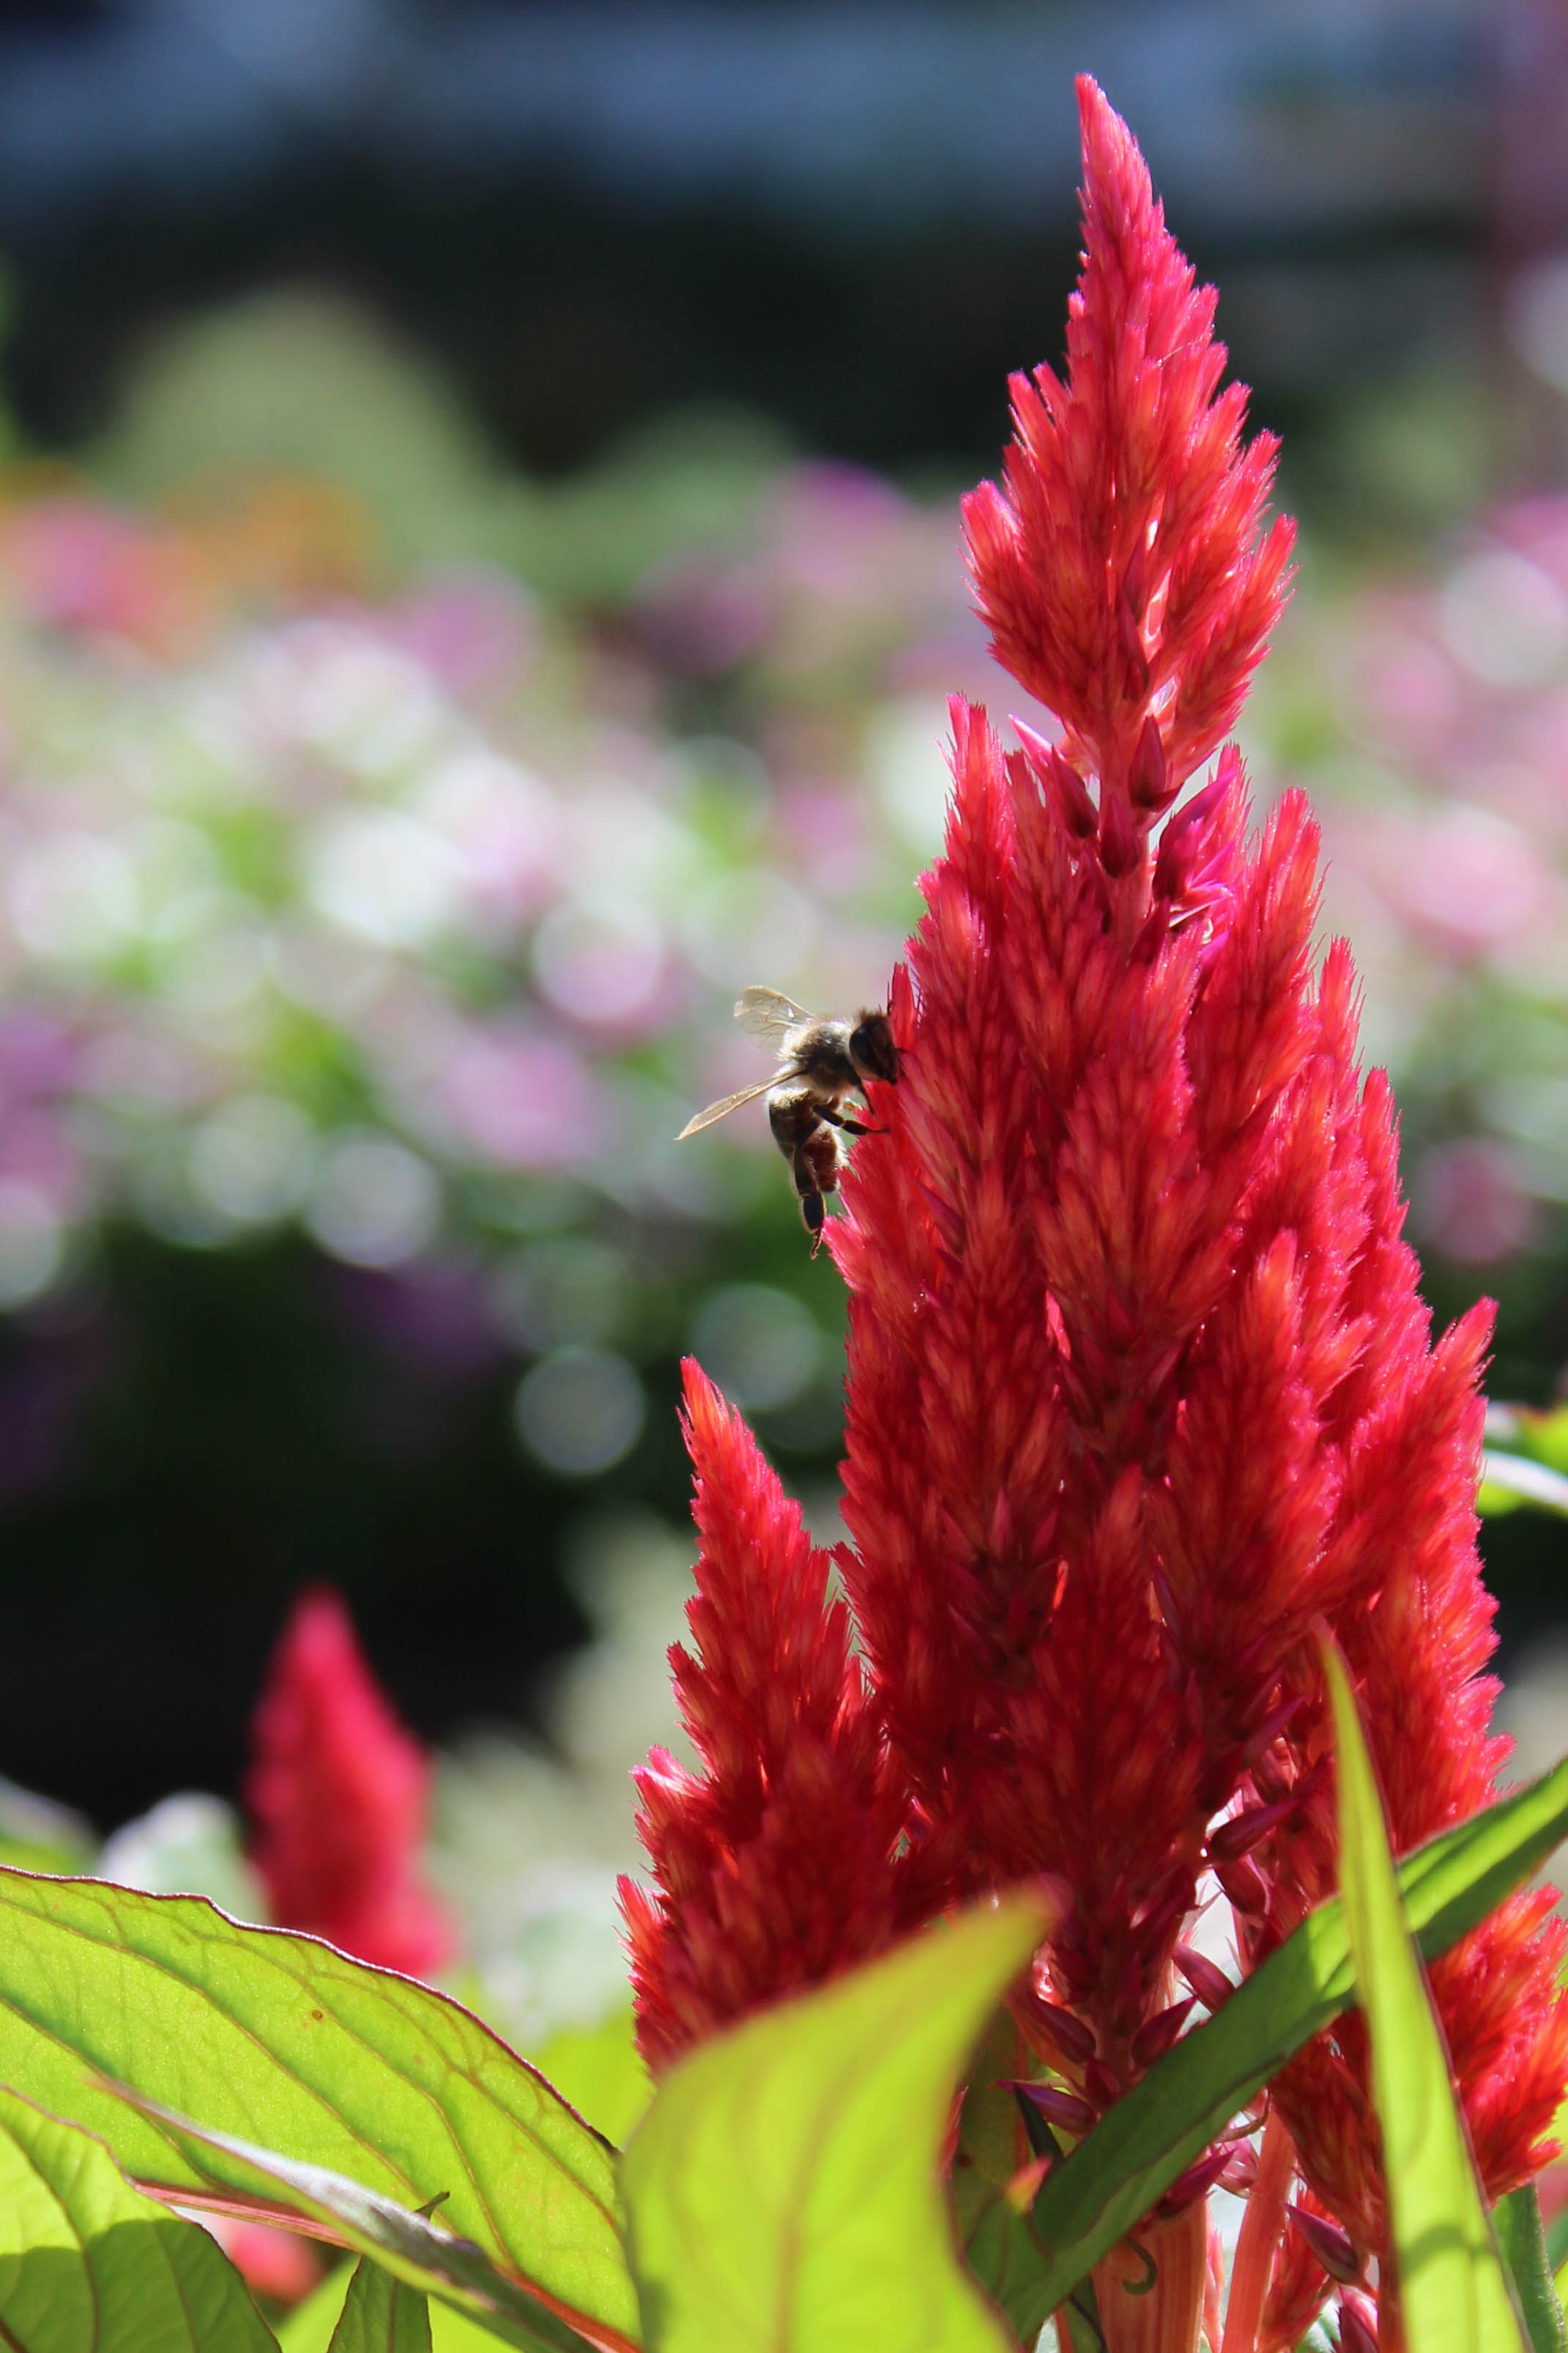 A bee landing on a flower.